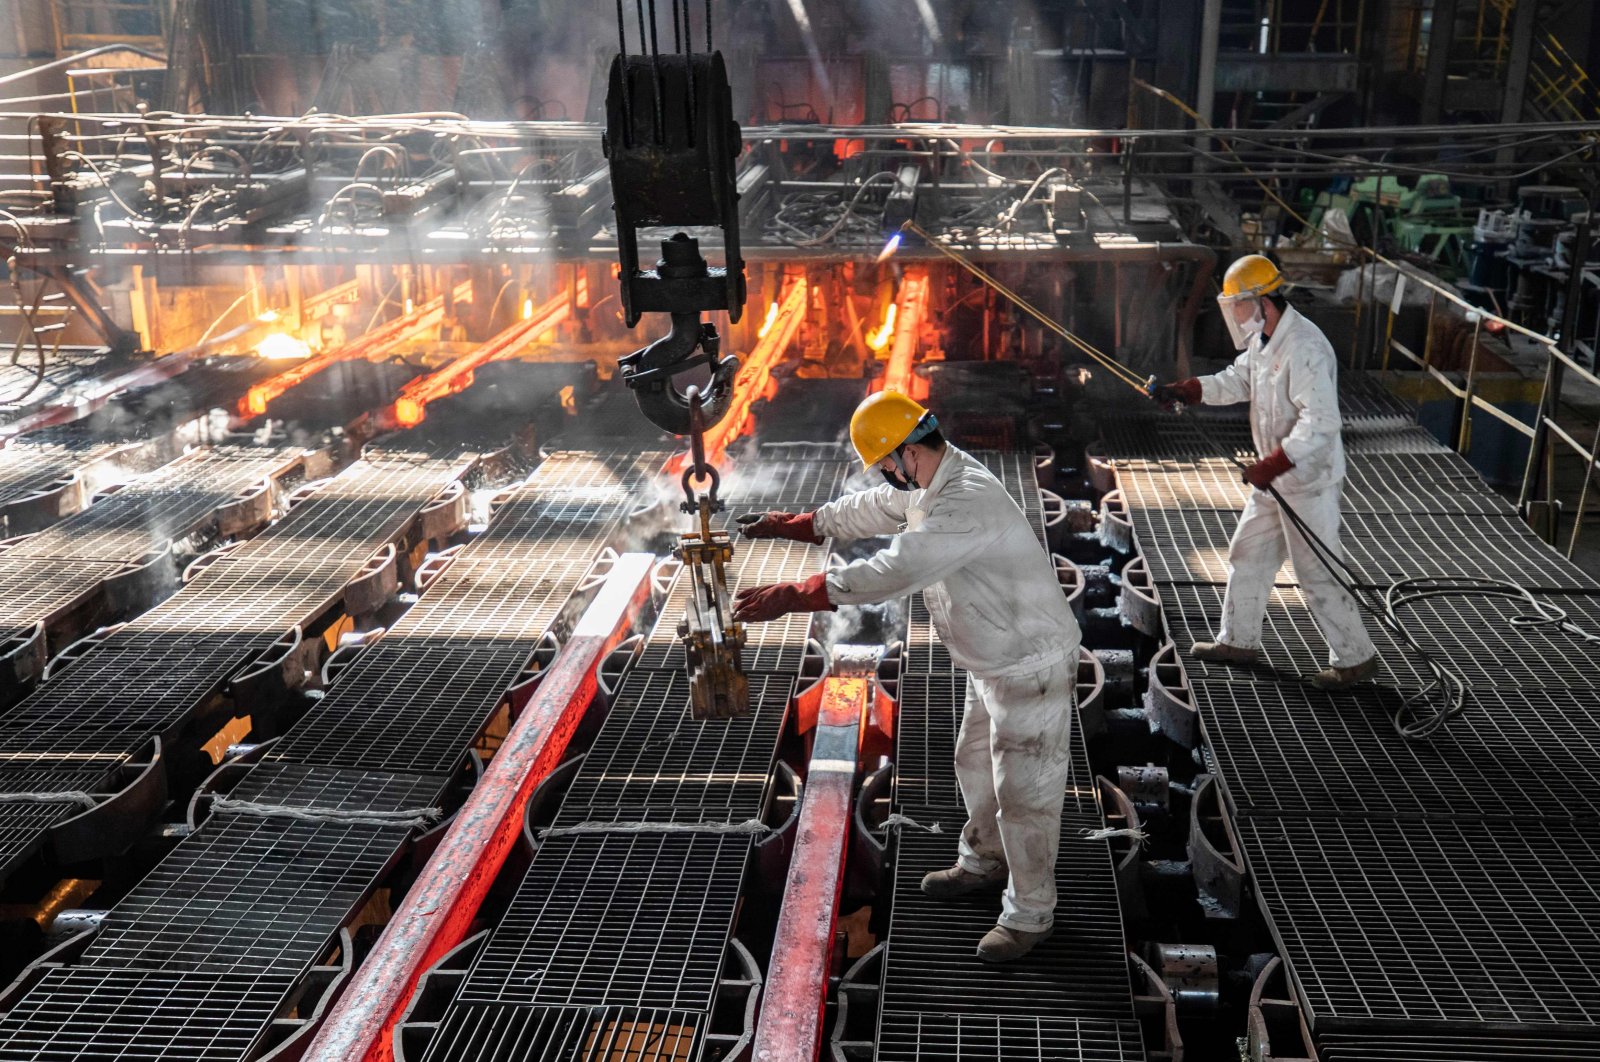 Workers make iron bars in a steel factory in Lianyungang, eastern Jiangsu province, China, Feb. 12, 2021. (AFP Photo)